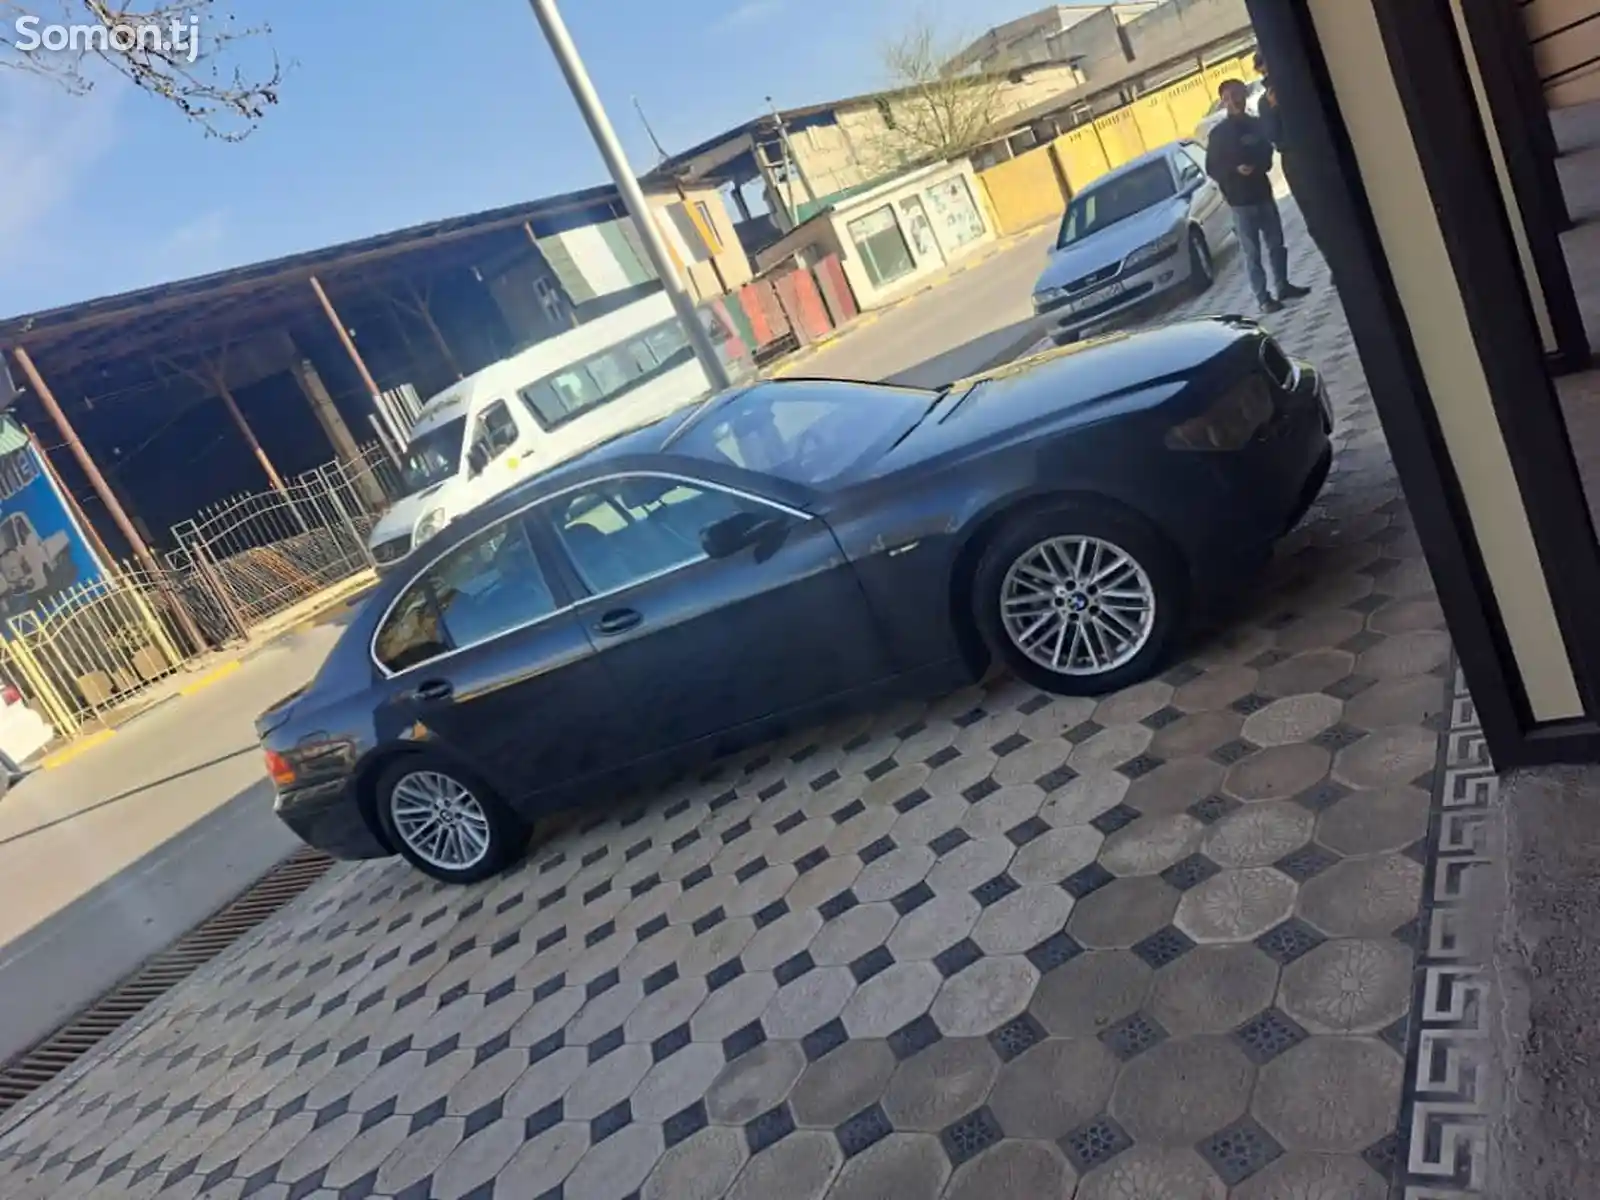 BMW 7 series, 2003-3